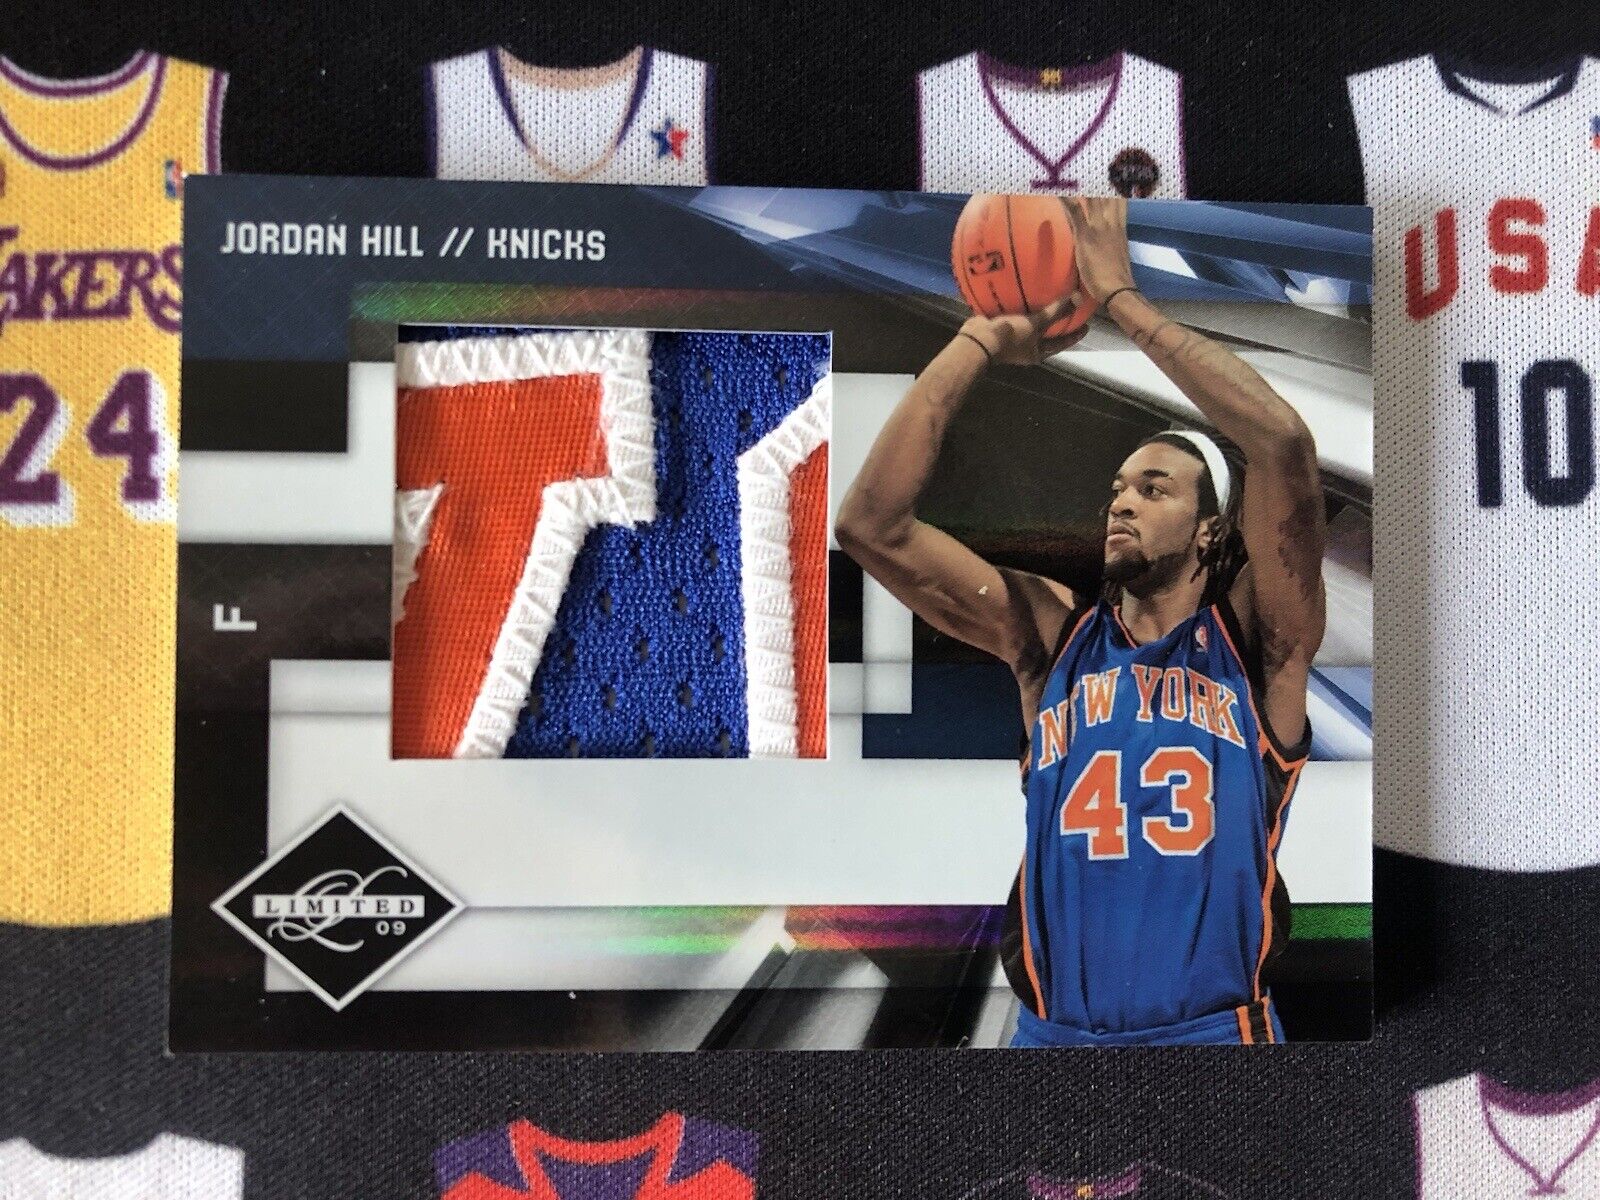 2009-10 Limited Freshmen Jumbo Prime #8 Jordan Hill /10 Knicks NBA Rookie Card